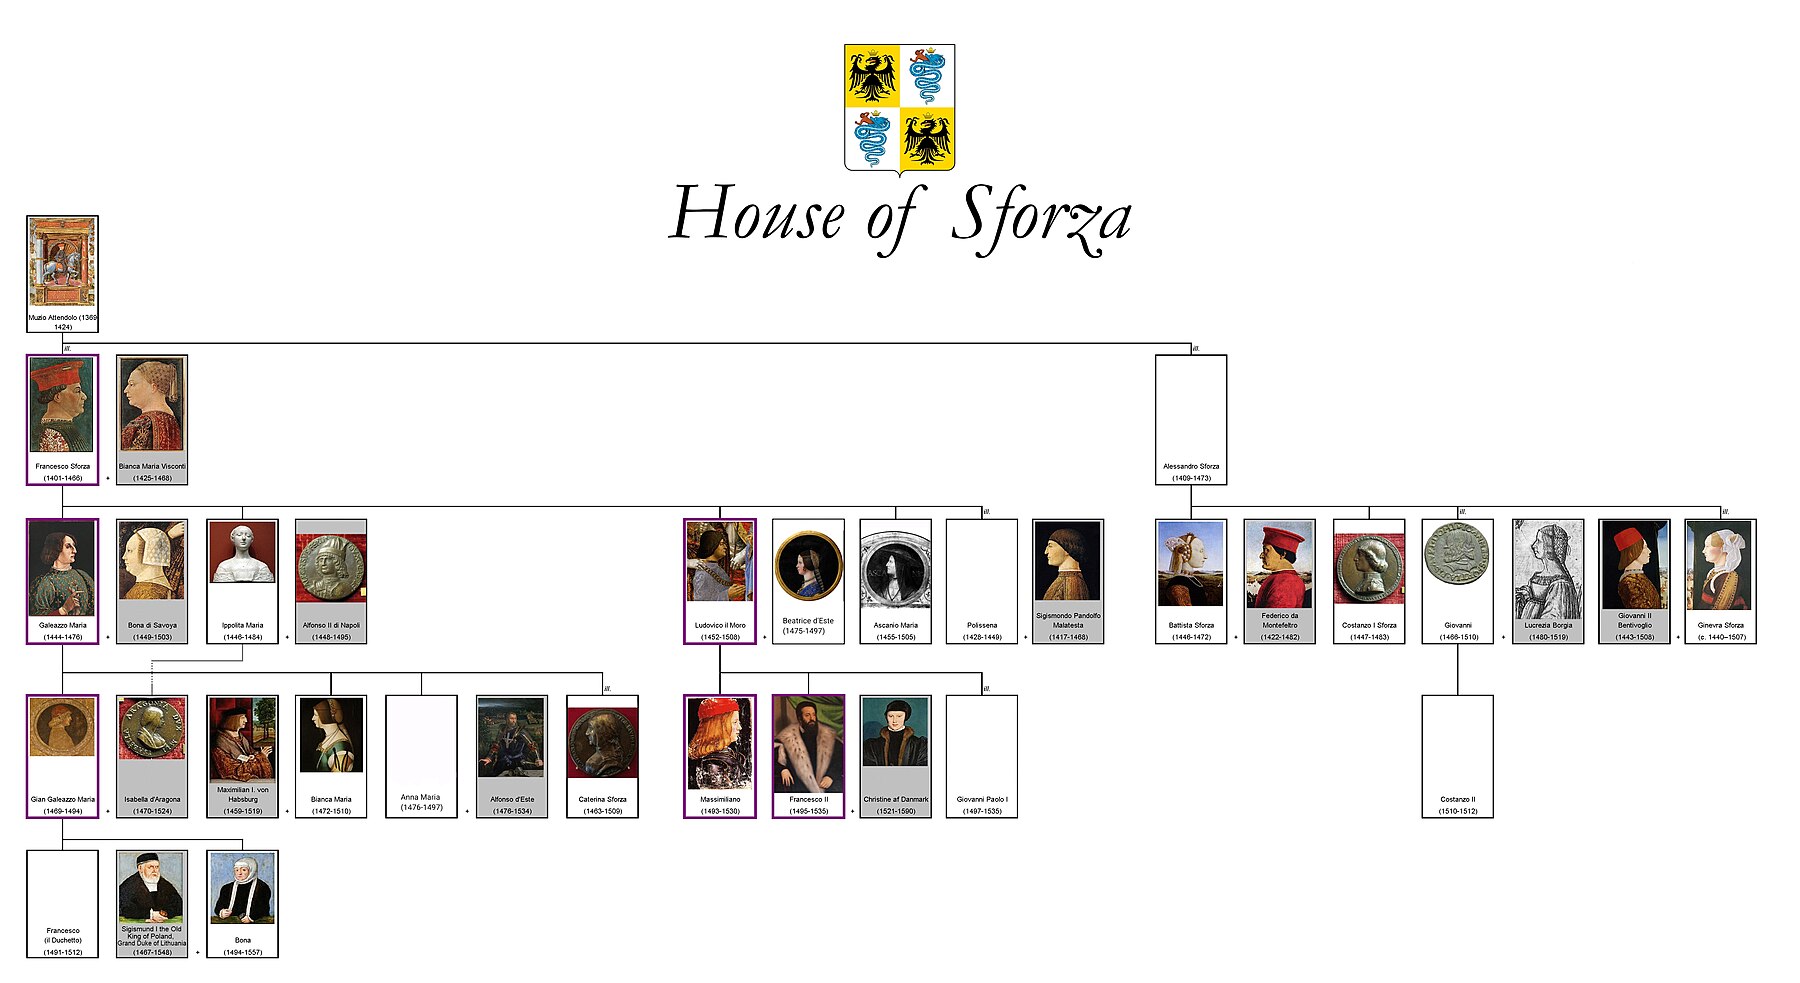 A family tree of the House of Sforza